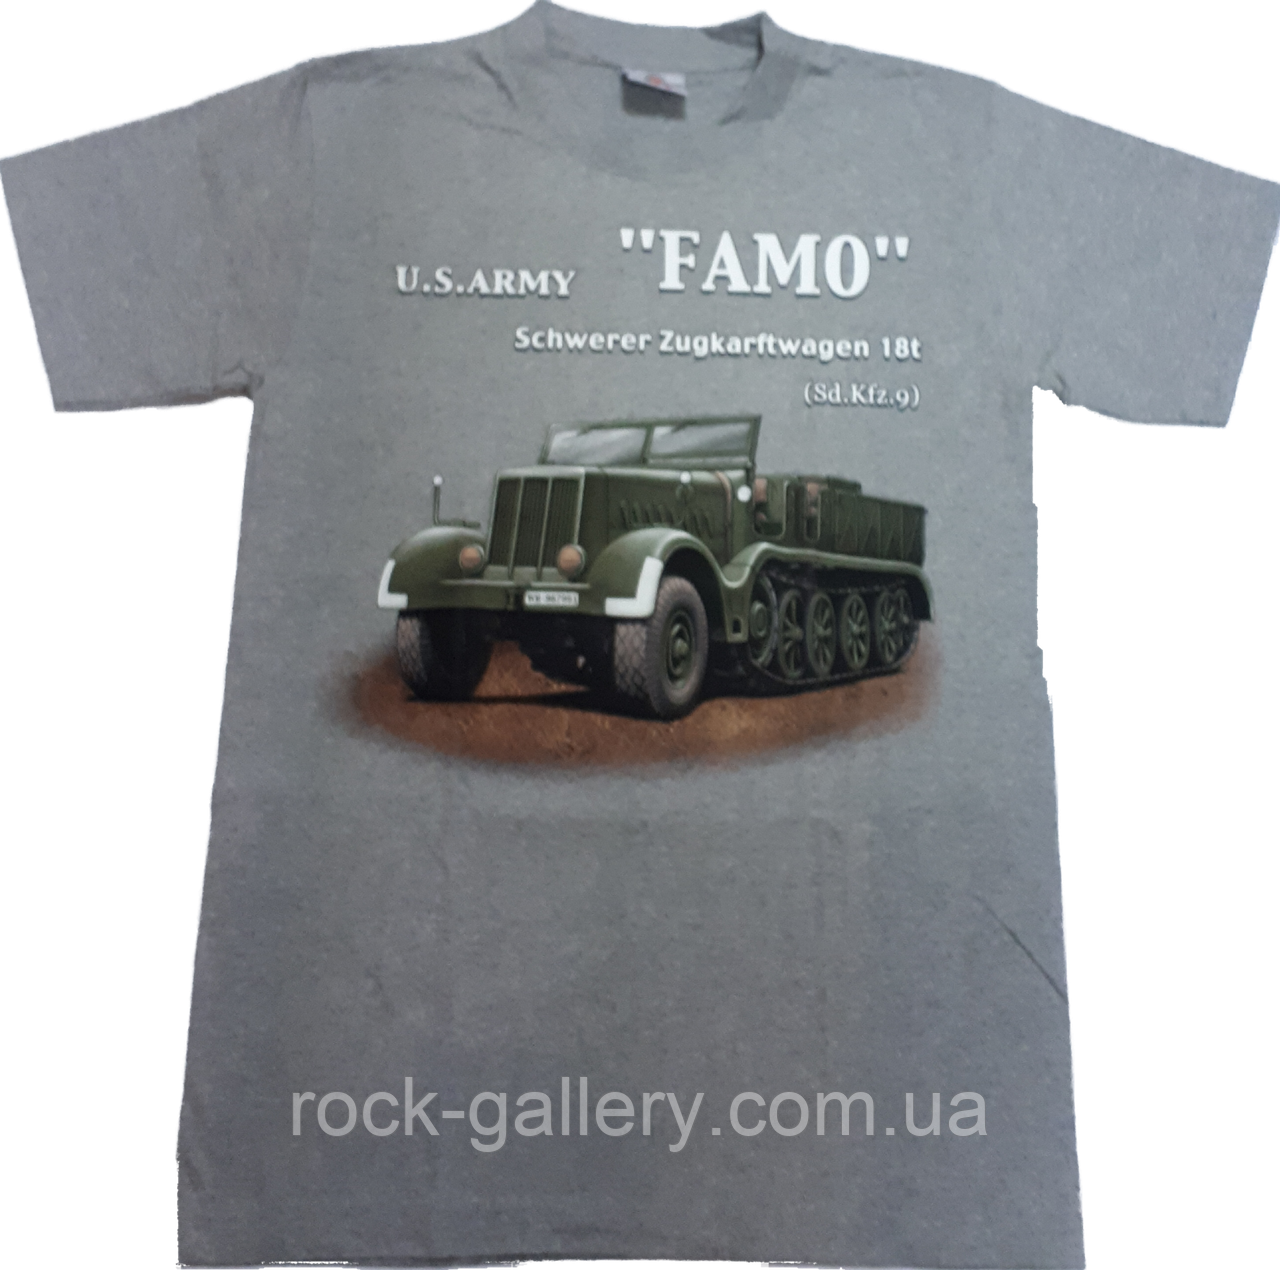 Футболка U.S.ARMY "FAMO"